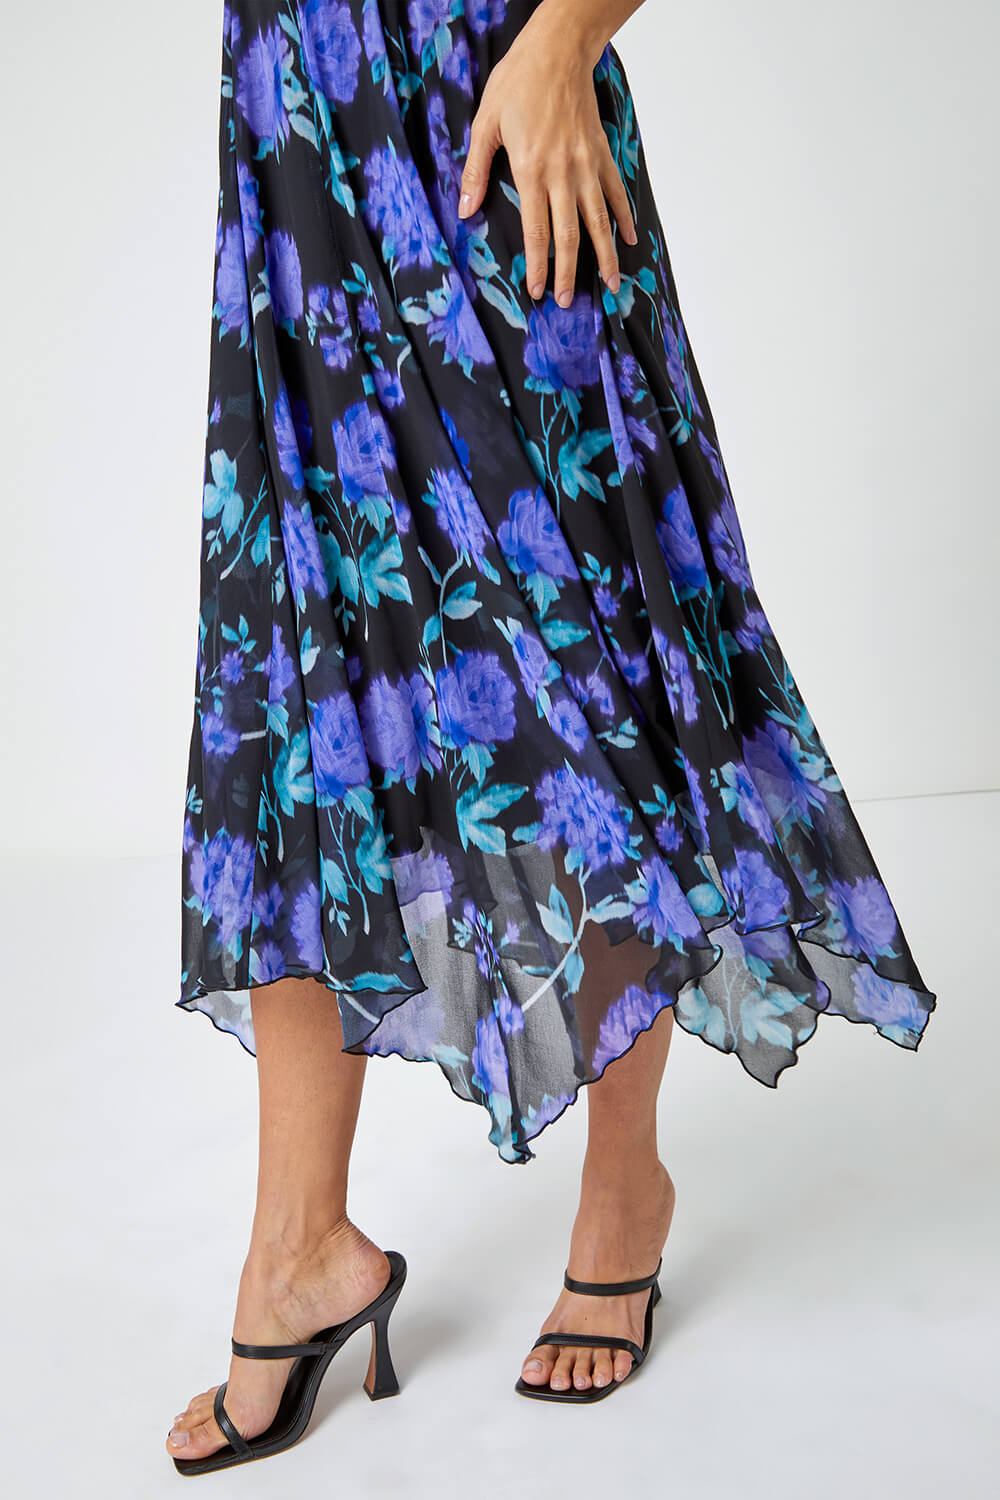 Black Sleeveless Floral Chiffon Midi Dress, Image 5 of 5